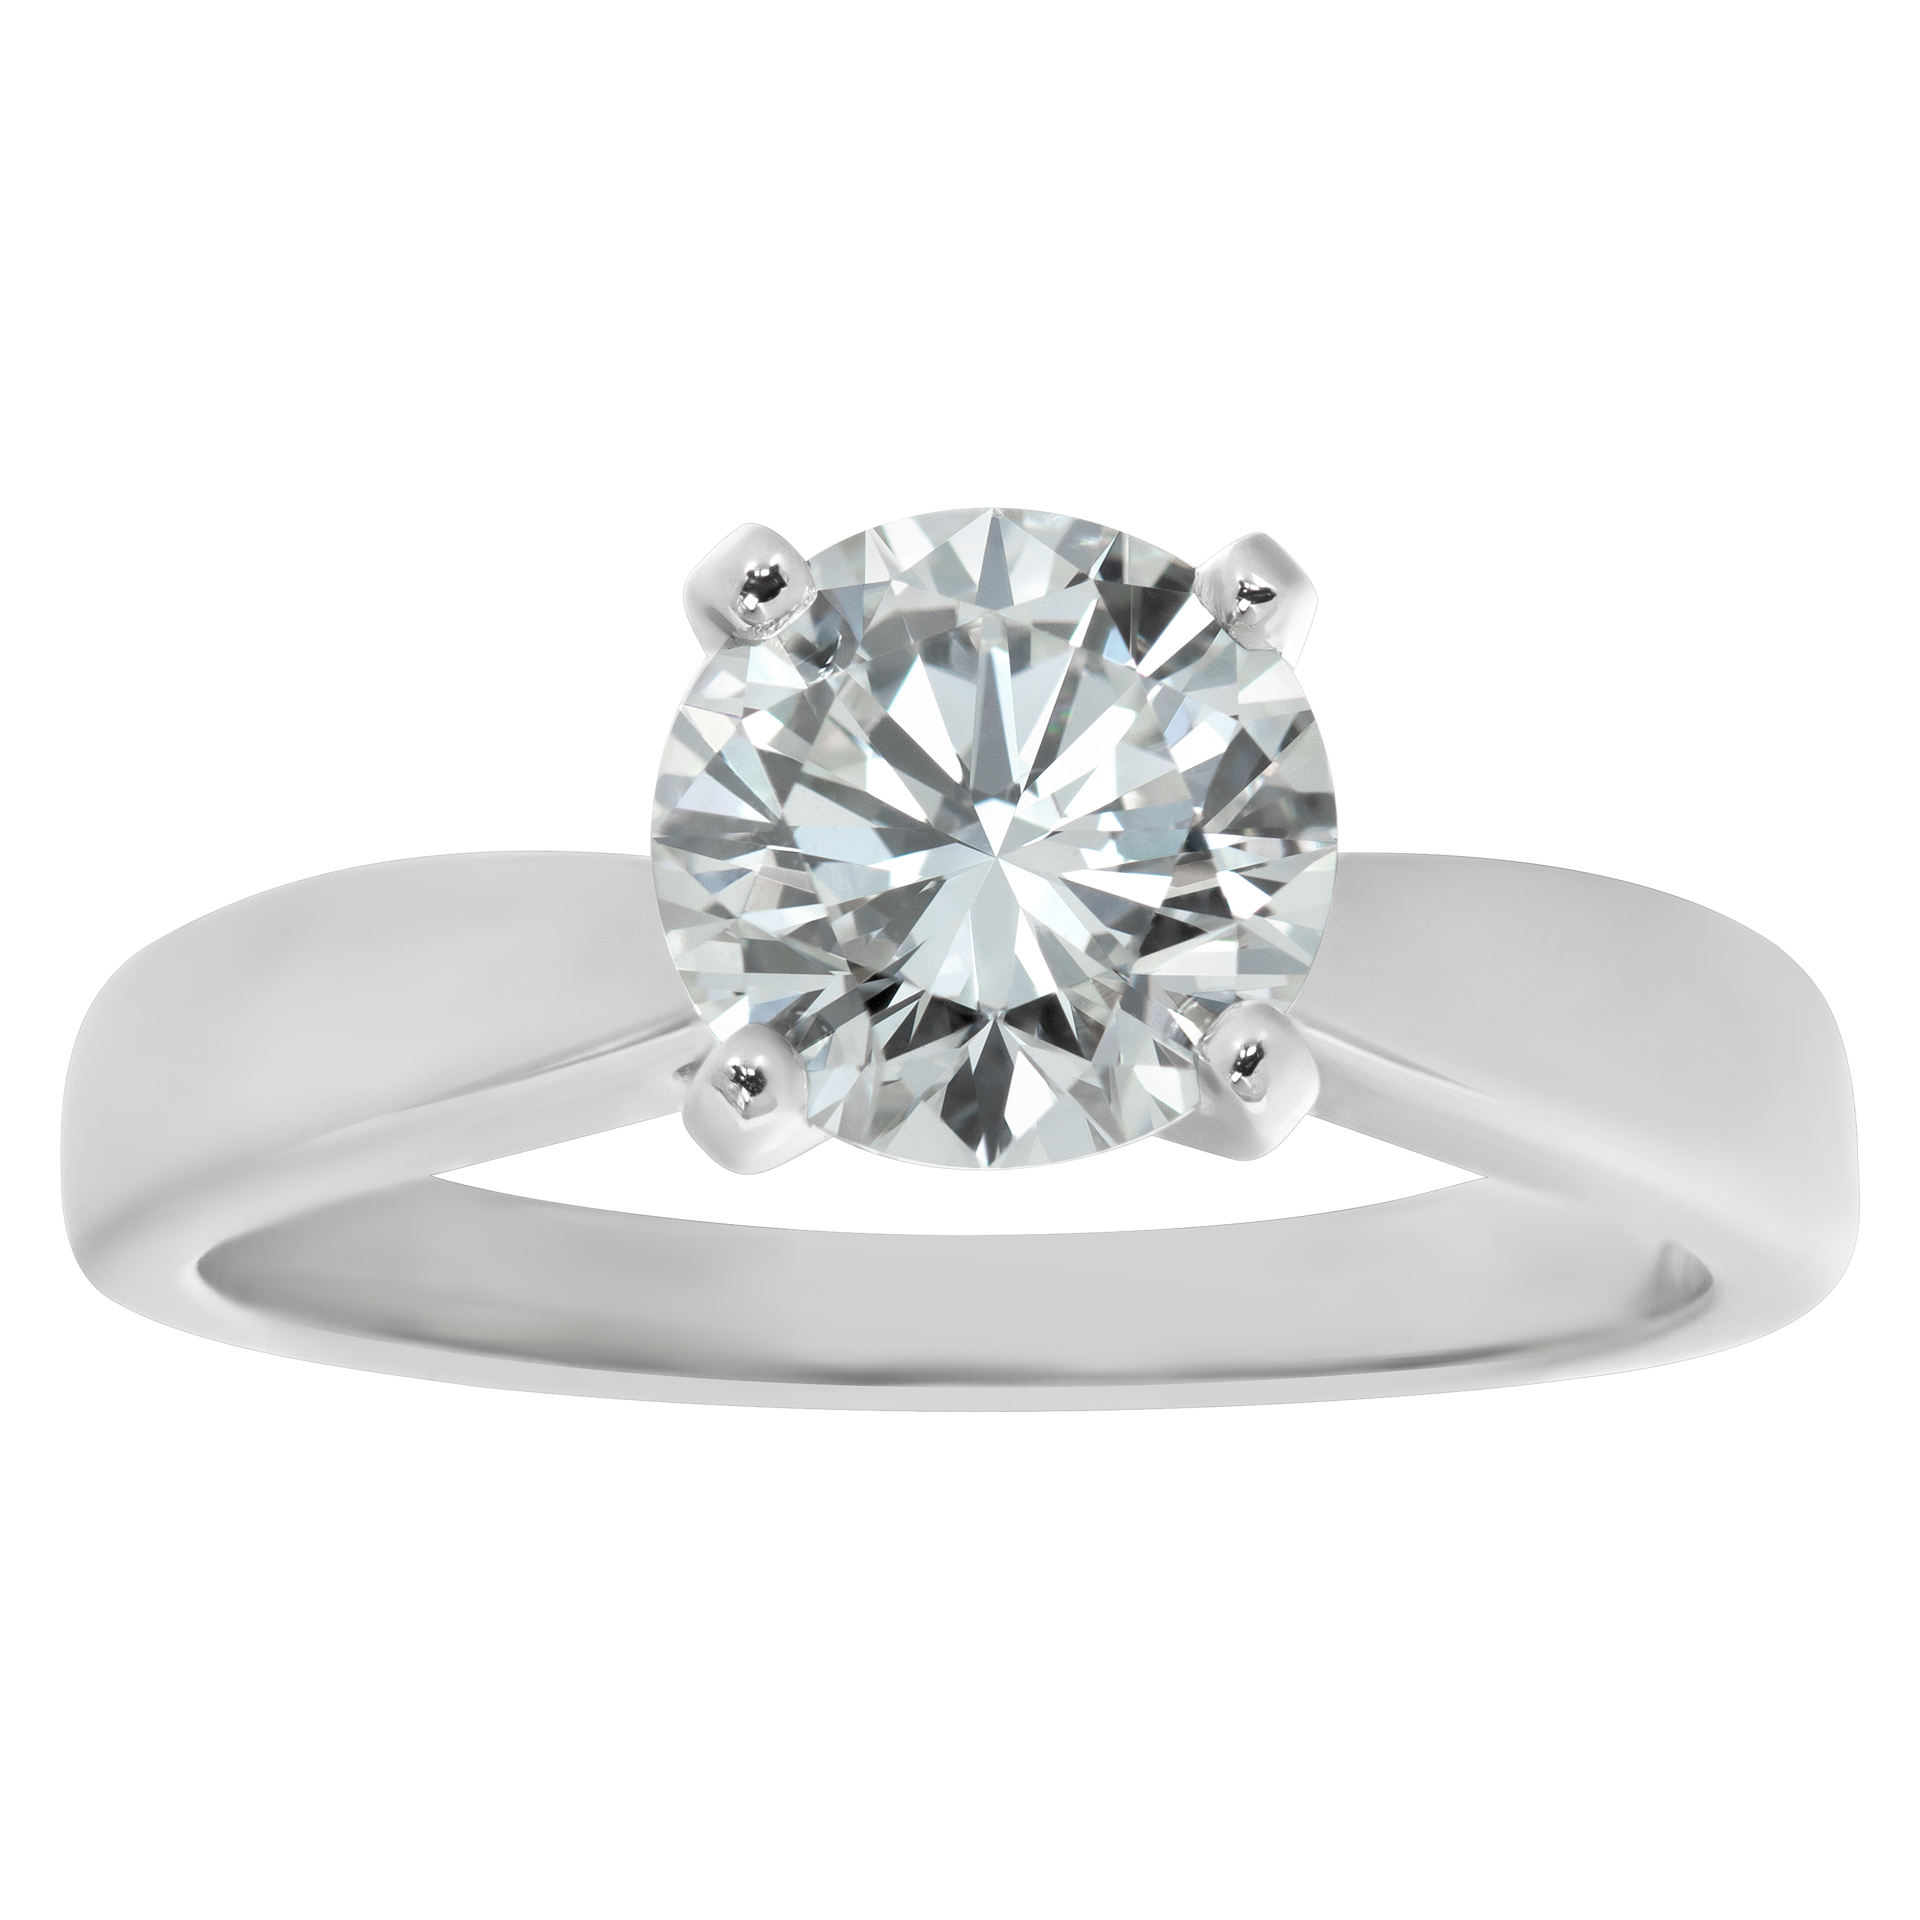 GIA certified round brilliant cut 1.78 carat diamond (I color, VS1 clarity) ring